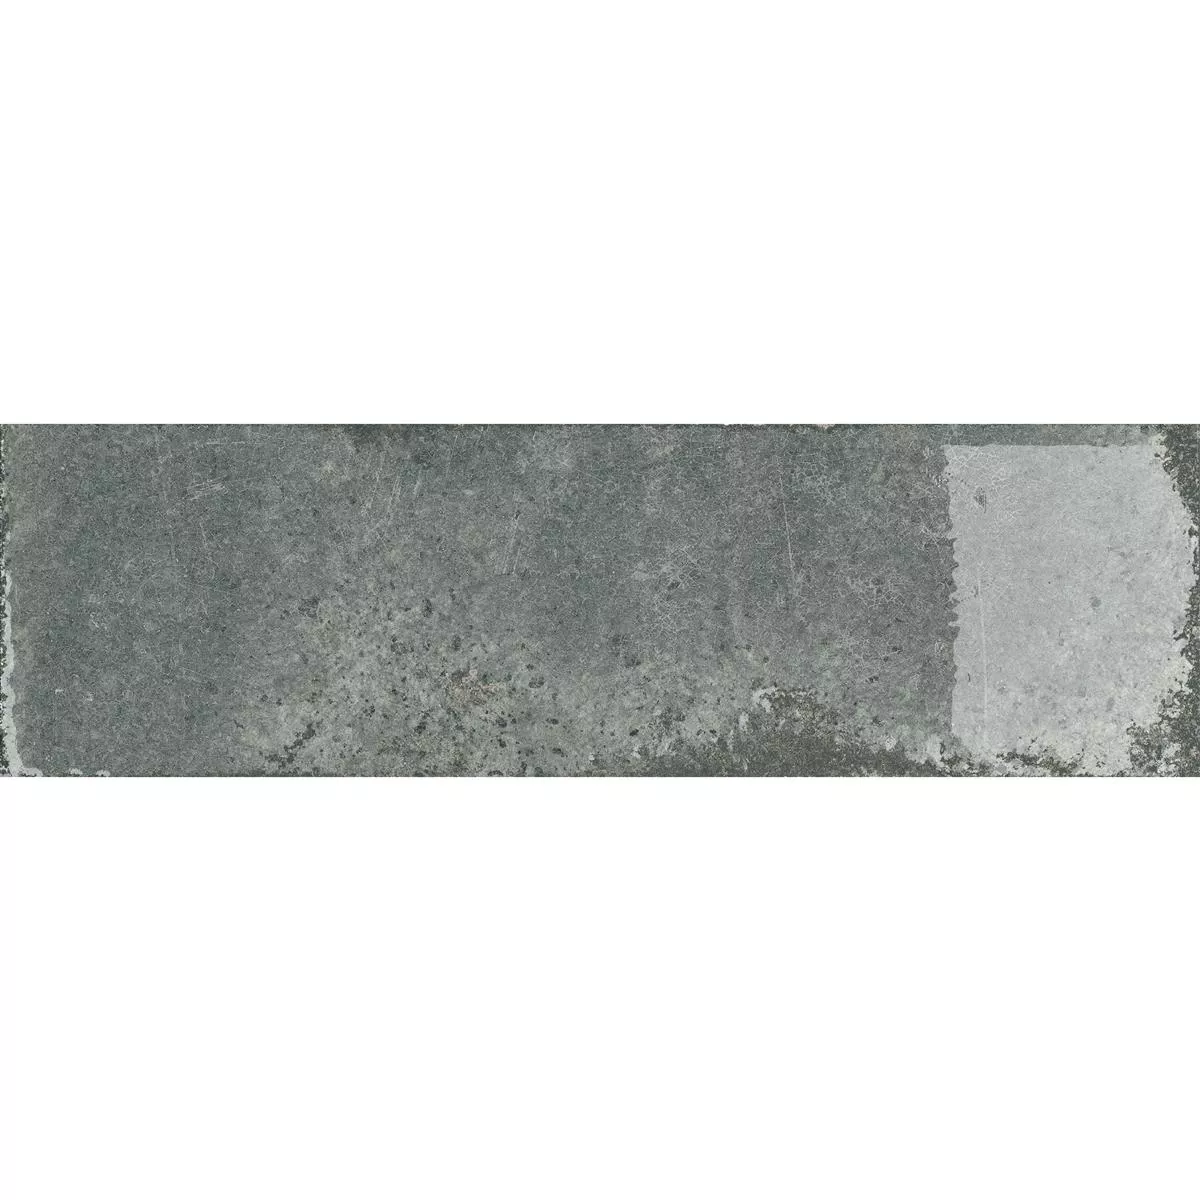 Próbka Płytki Ścienne Lara Błyszczący Karbowany 10x30cm Szary